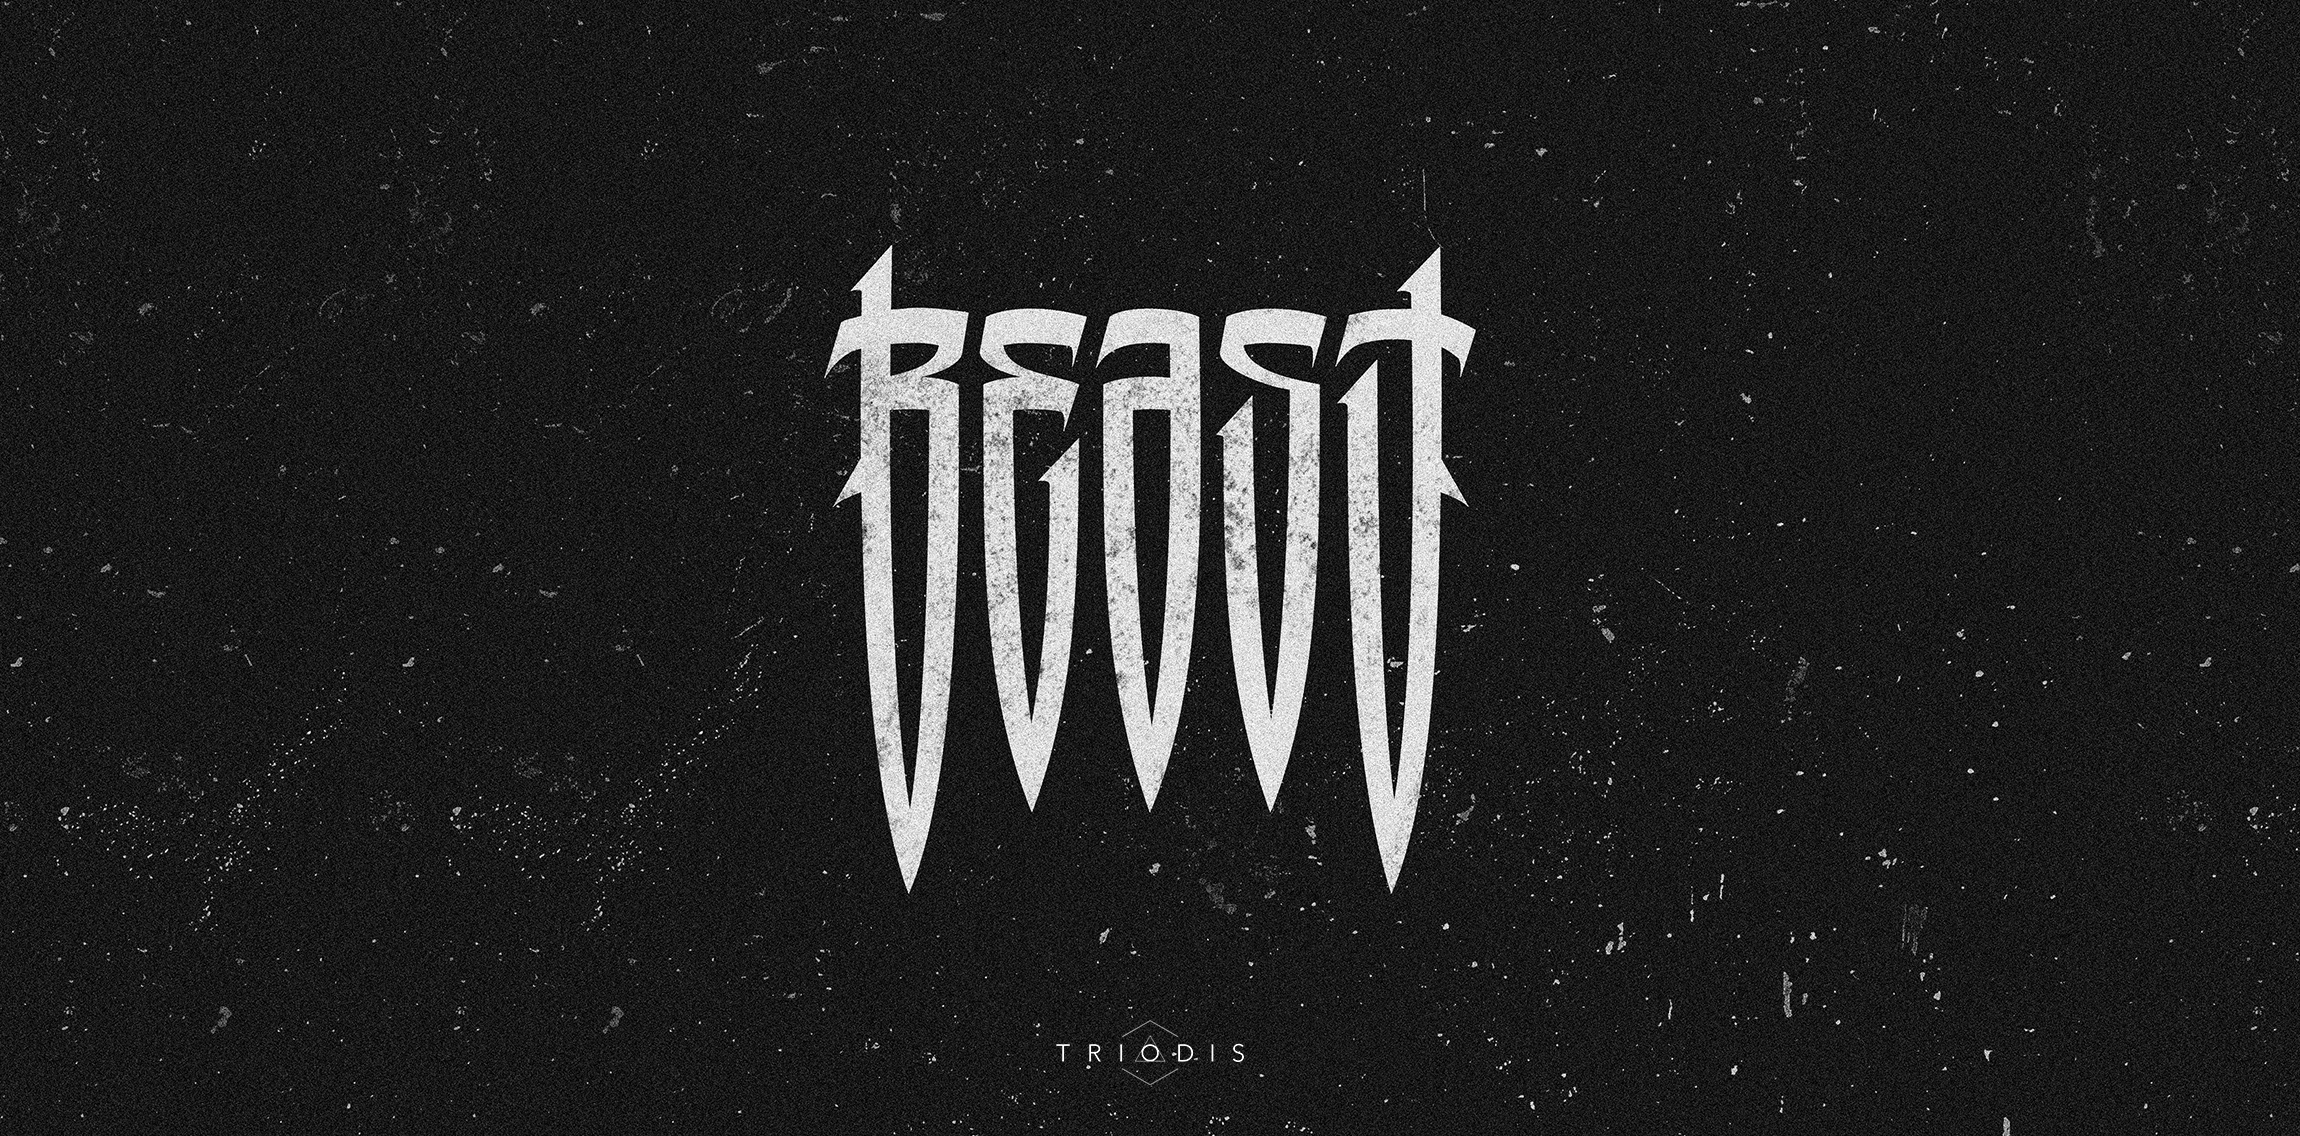 the beast logo